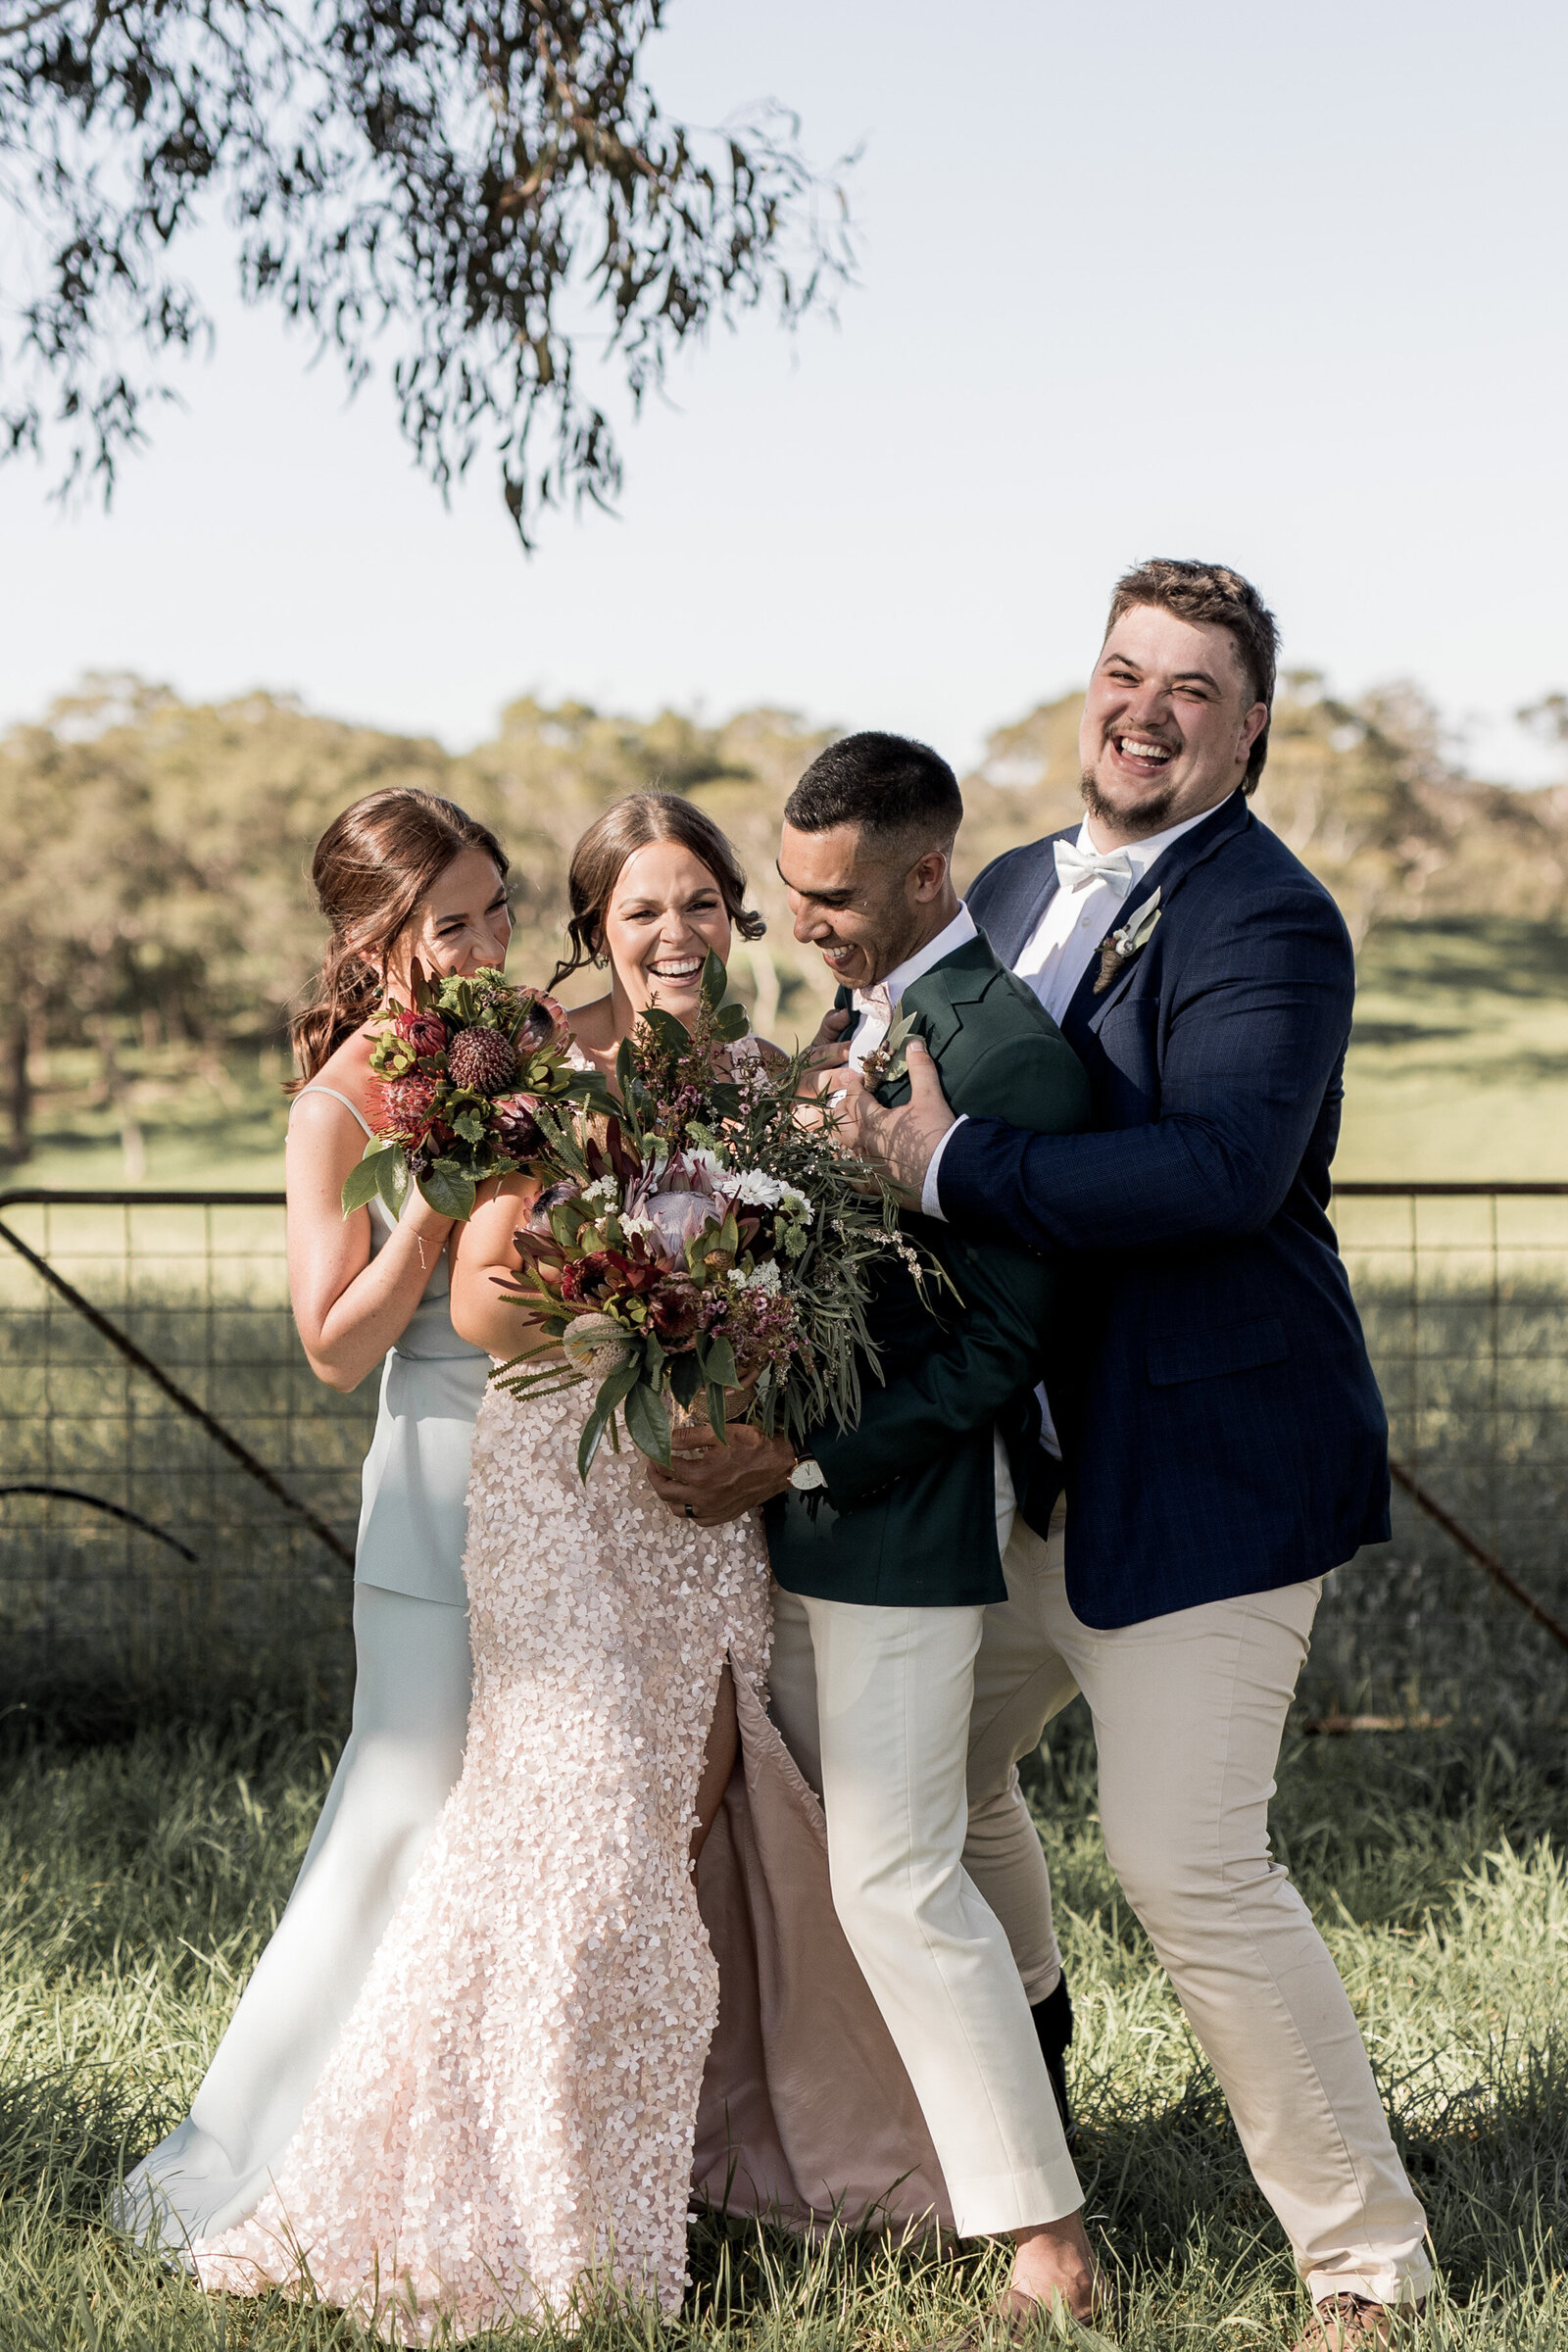 Chloe-Benny-Rexvil-Photography-Adelaide-Wedding-Photographer-313